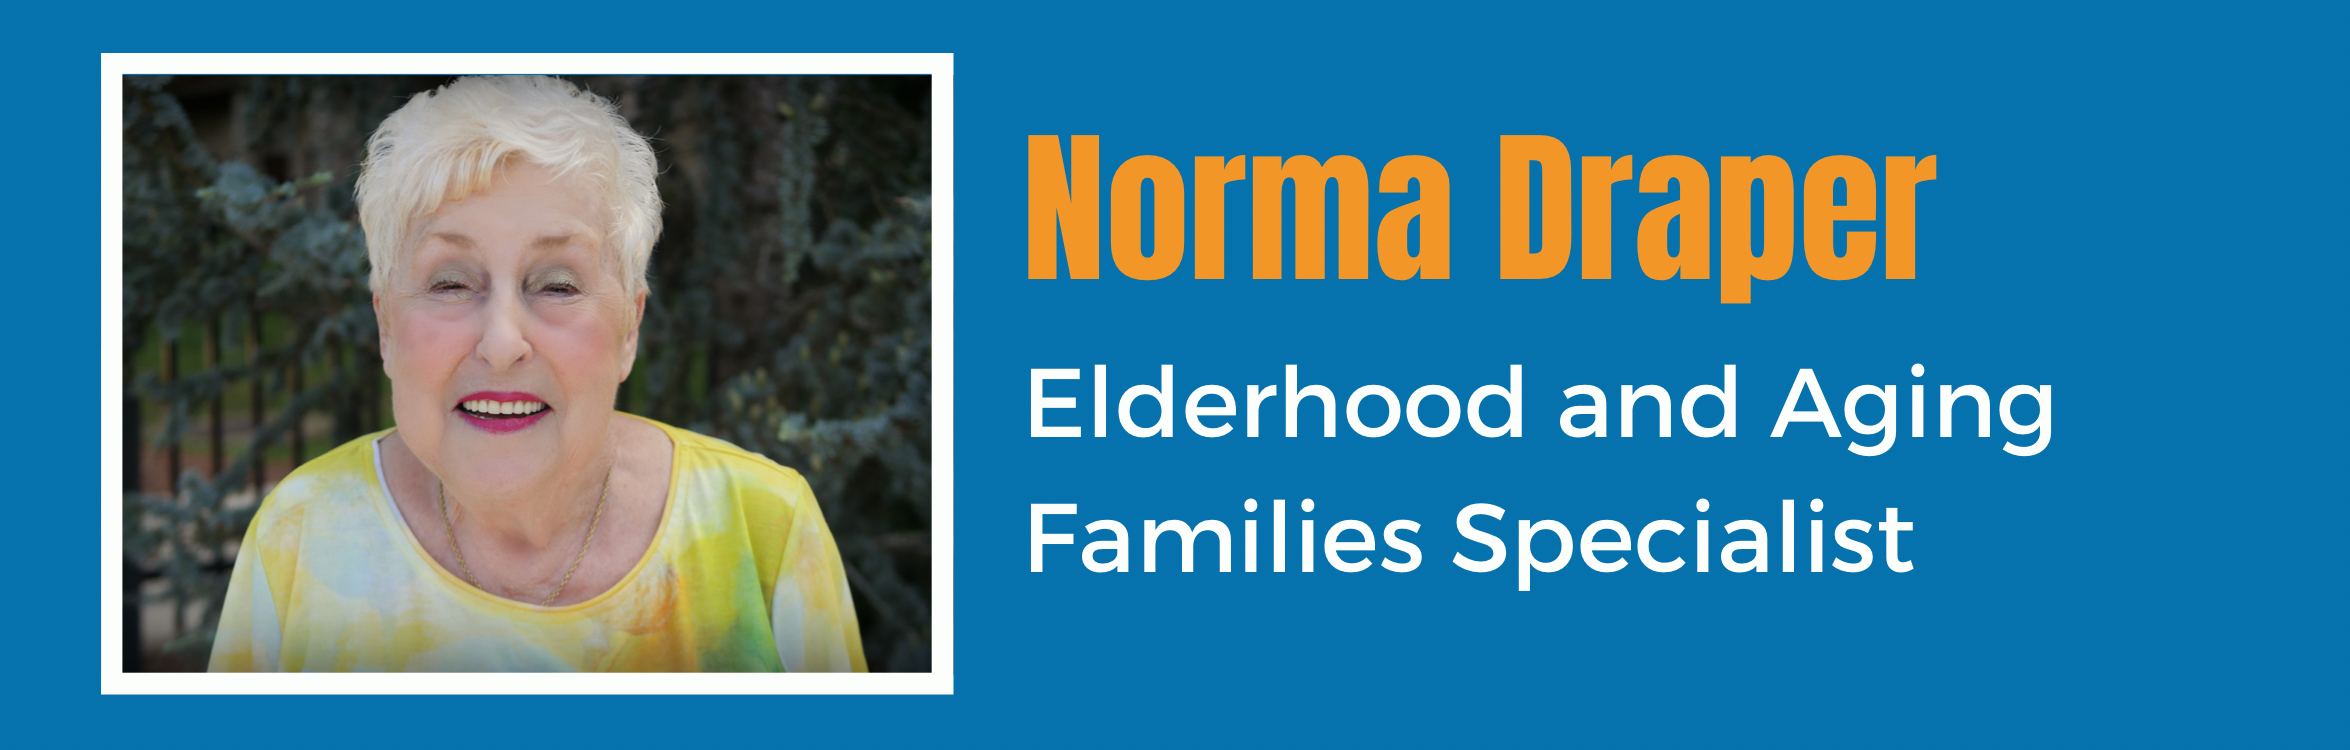 tNormal Draper, Elderhood and Aging Families Specialists